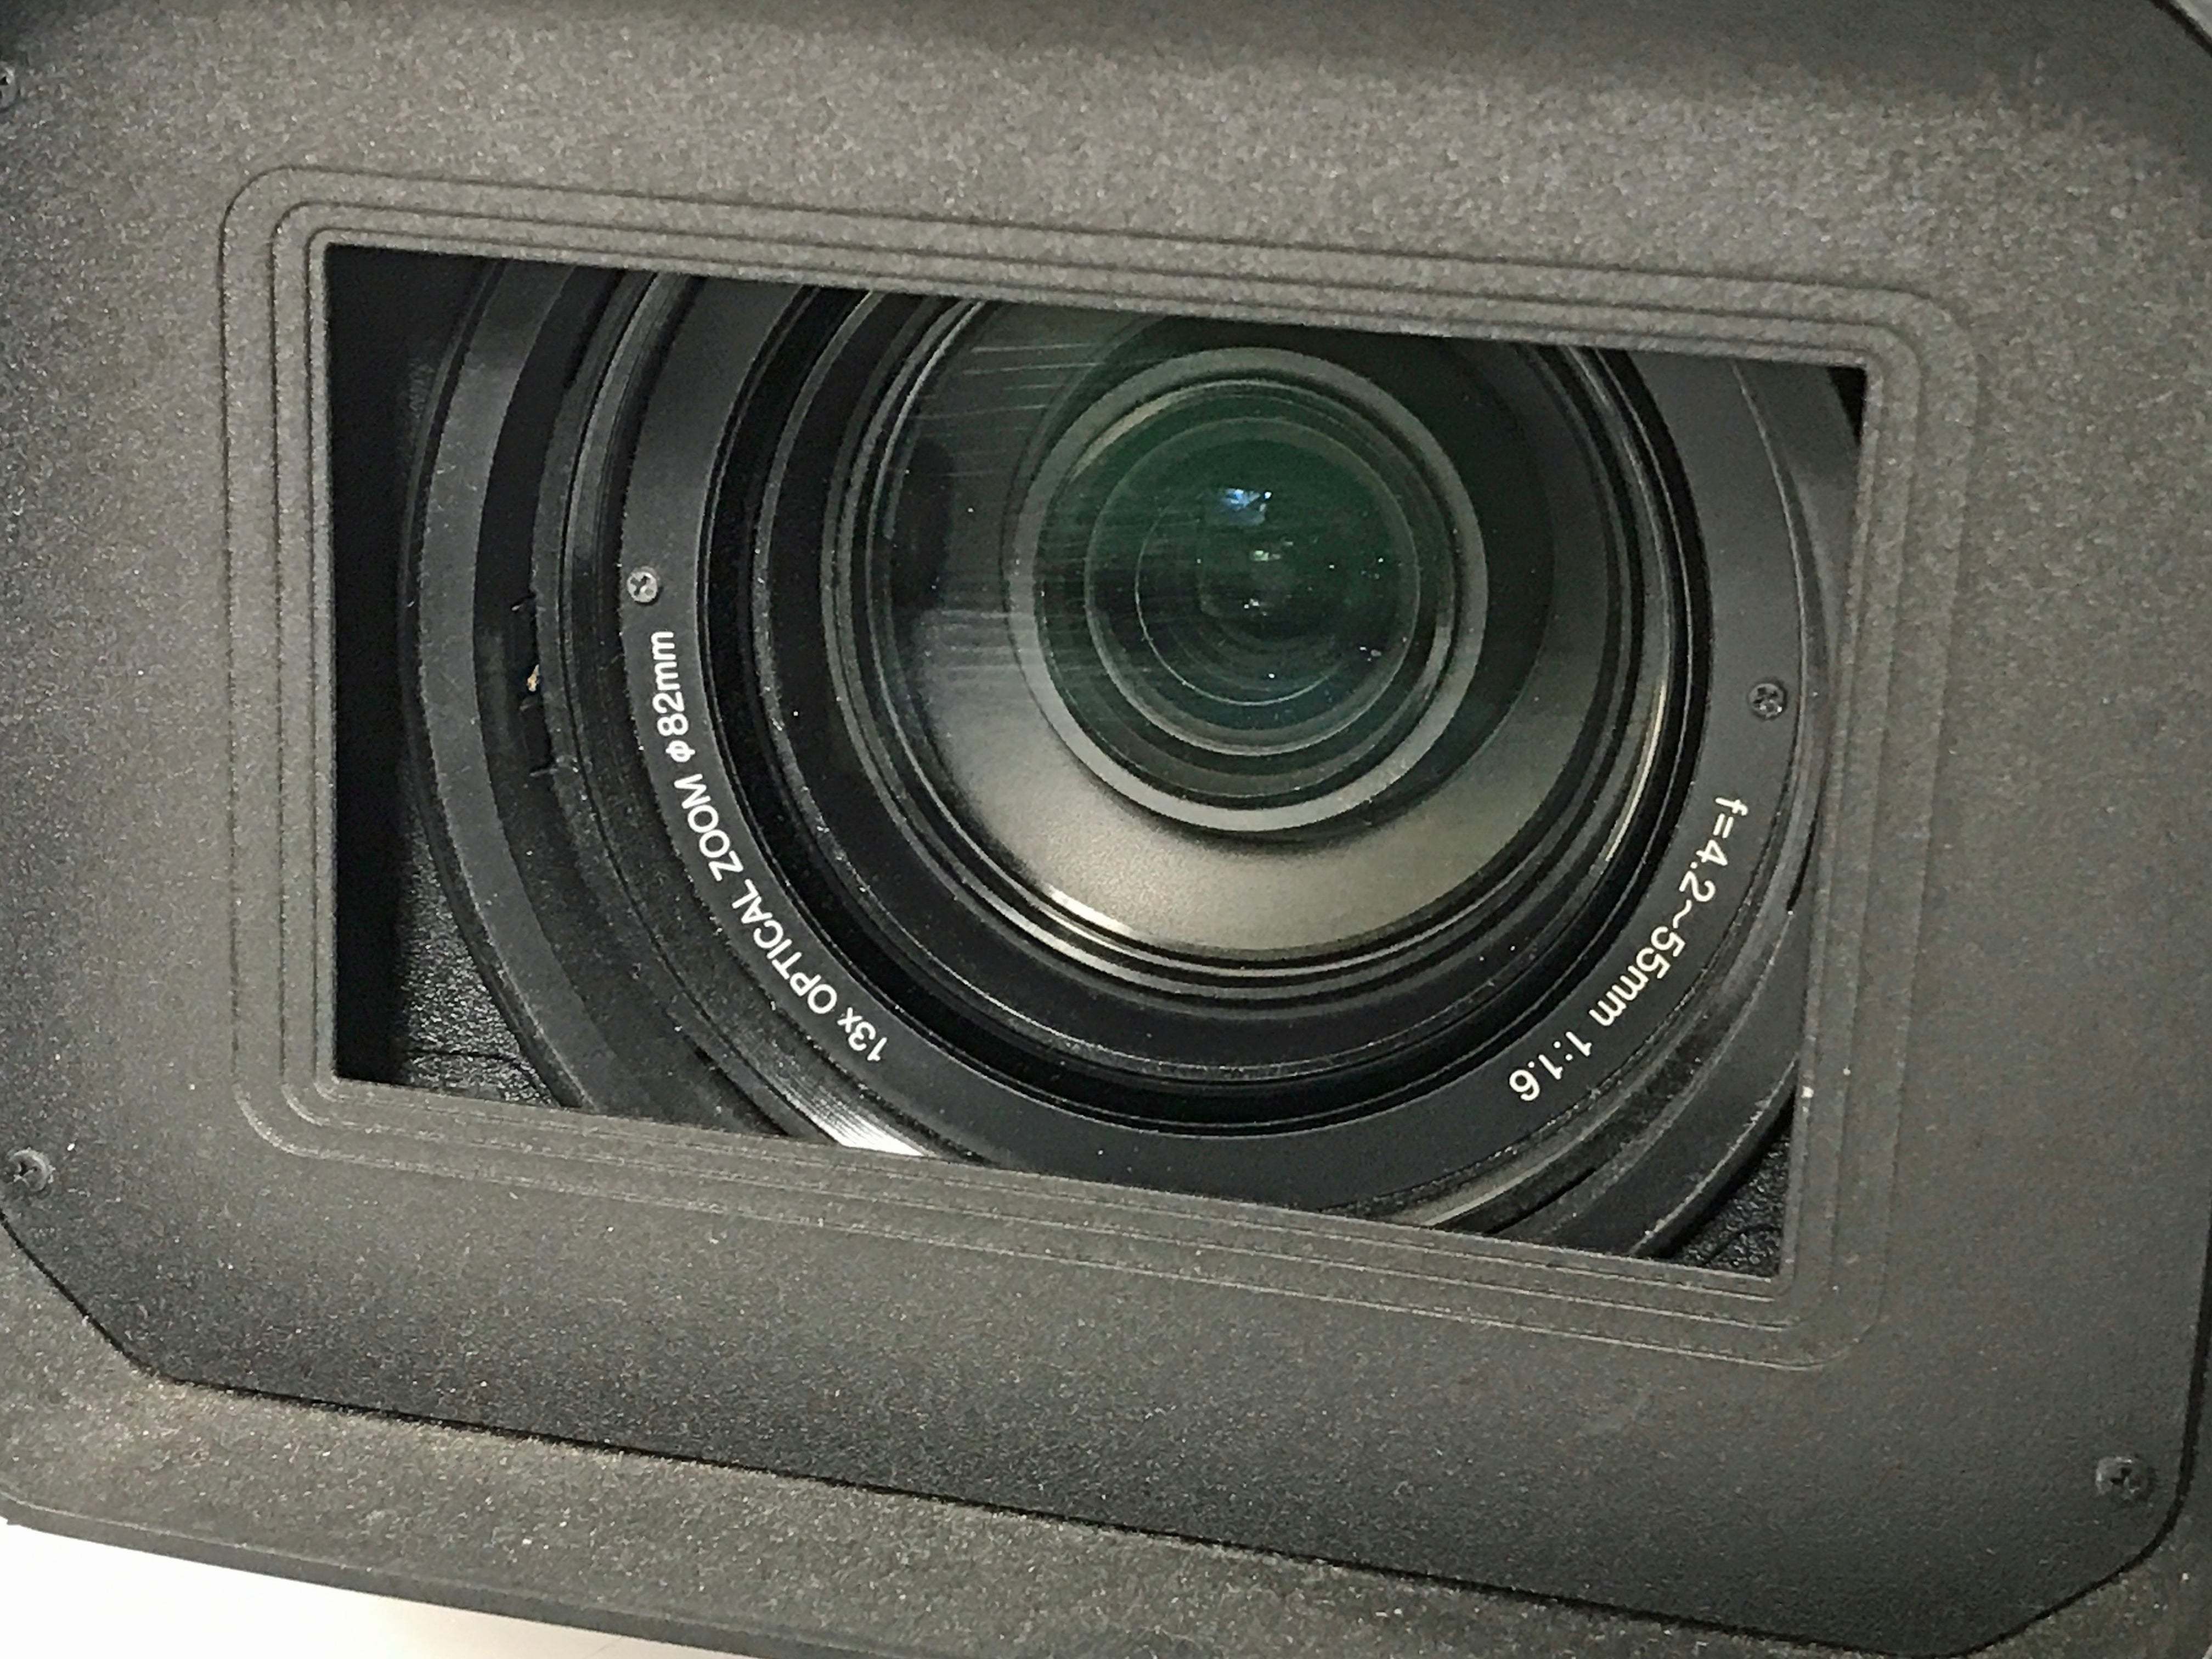 Panasonic AG-HVX200P 3-CCD P2/DVCPRO HD Format Camcorder